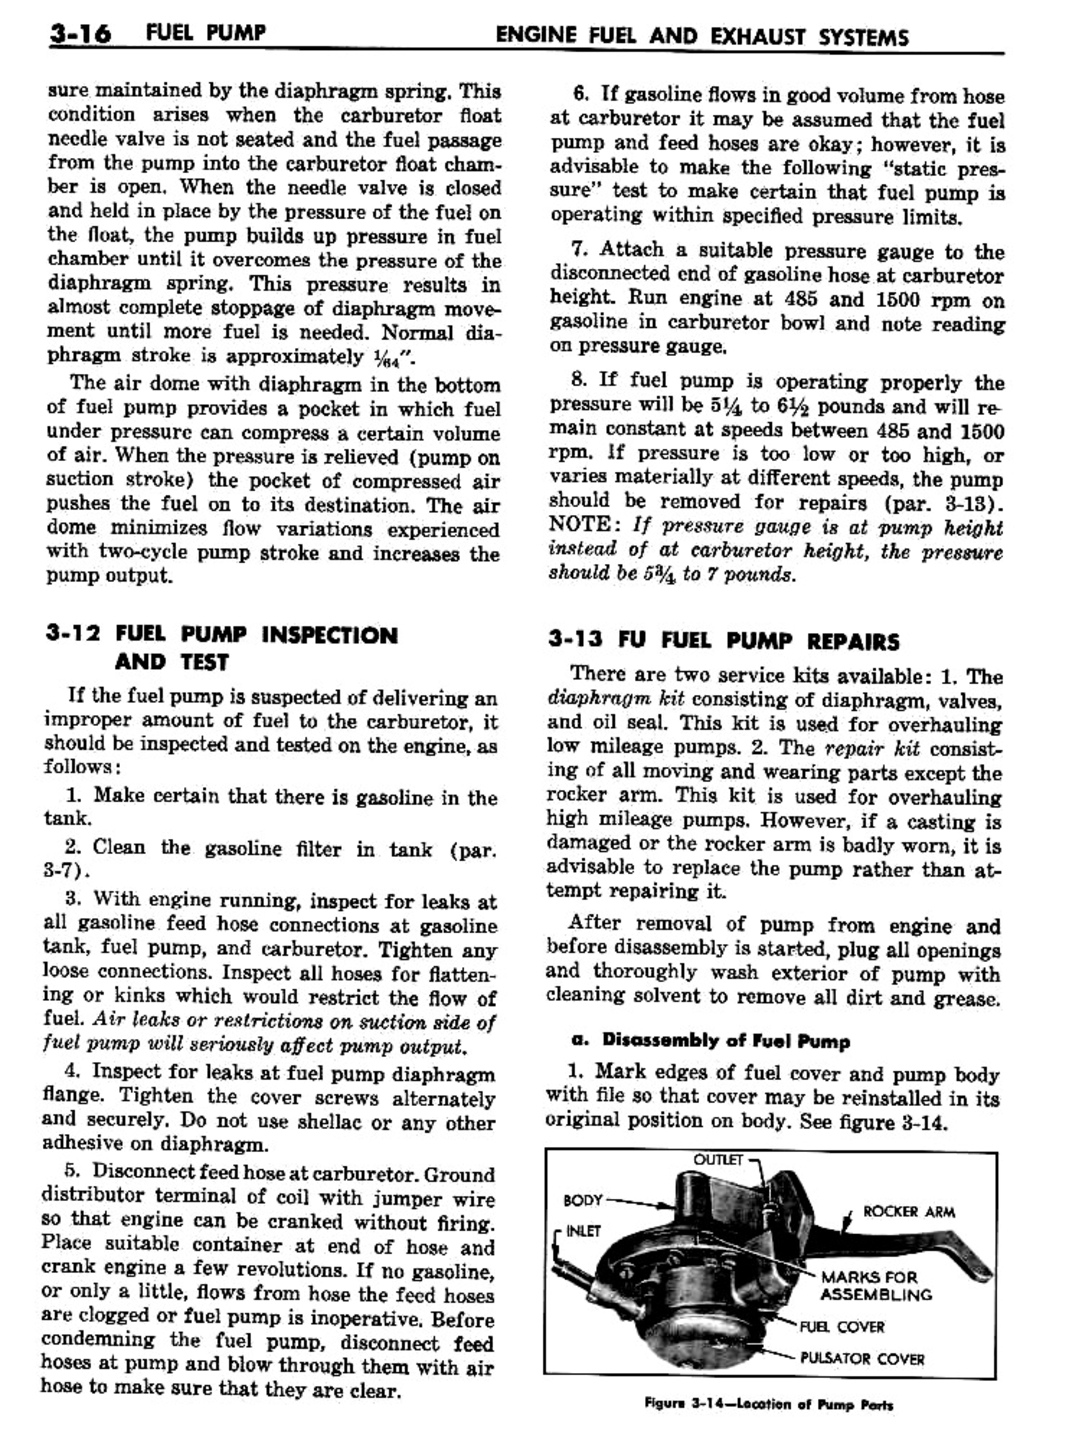 n_04 1957 Buick Shop Manual - Engine Fuel & Exhaust-016-016.jpg